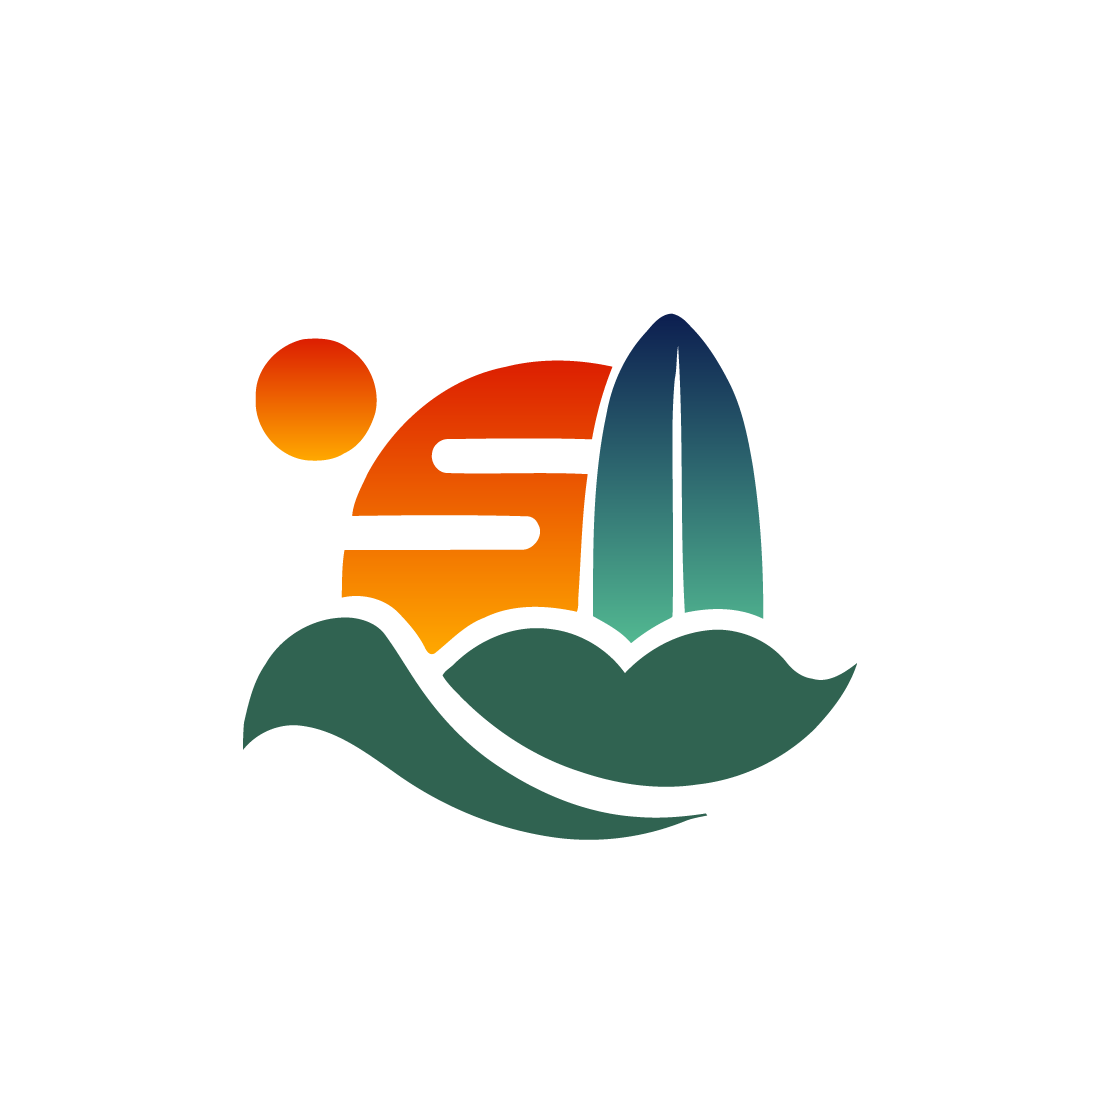 surf logo design preview image.